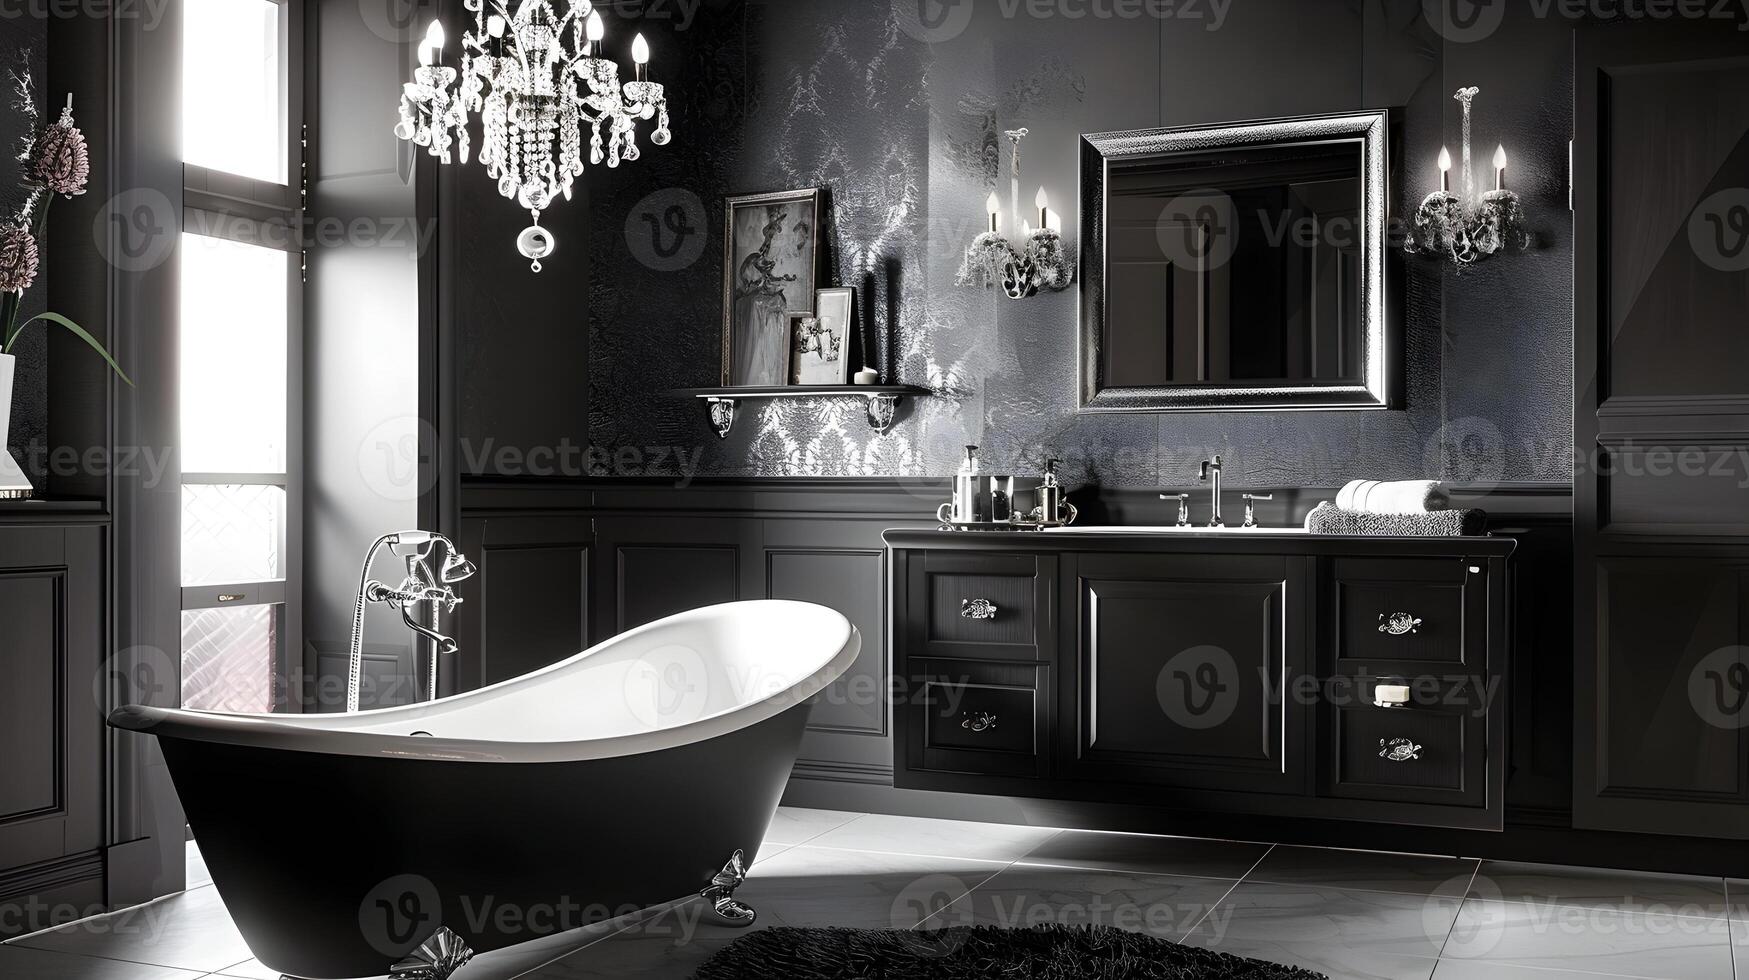 Elegant Monochrome Bathroom with Vintage Bathtub and Crystal Chandelier photo